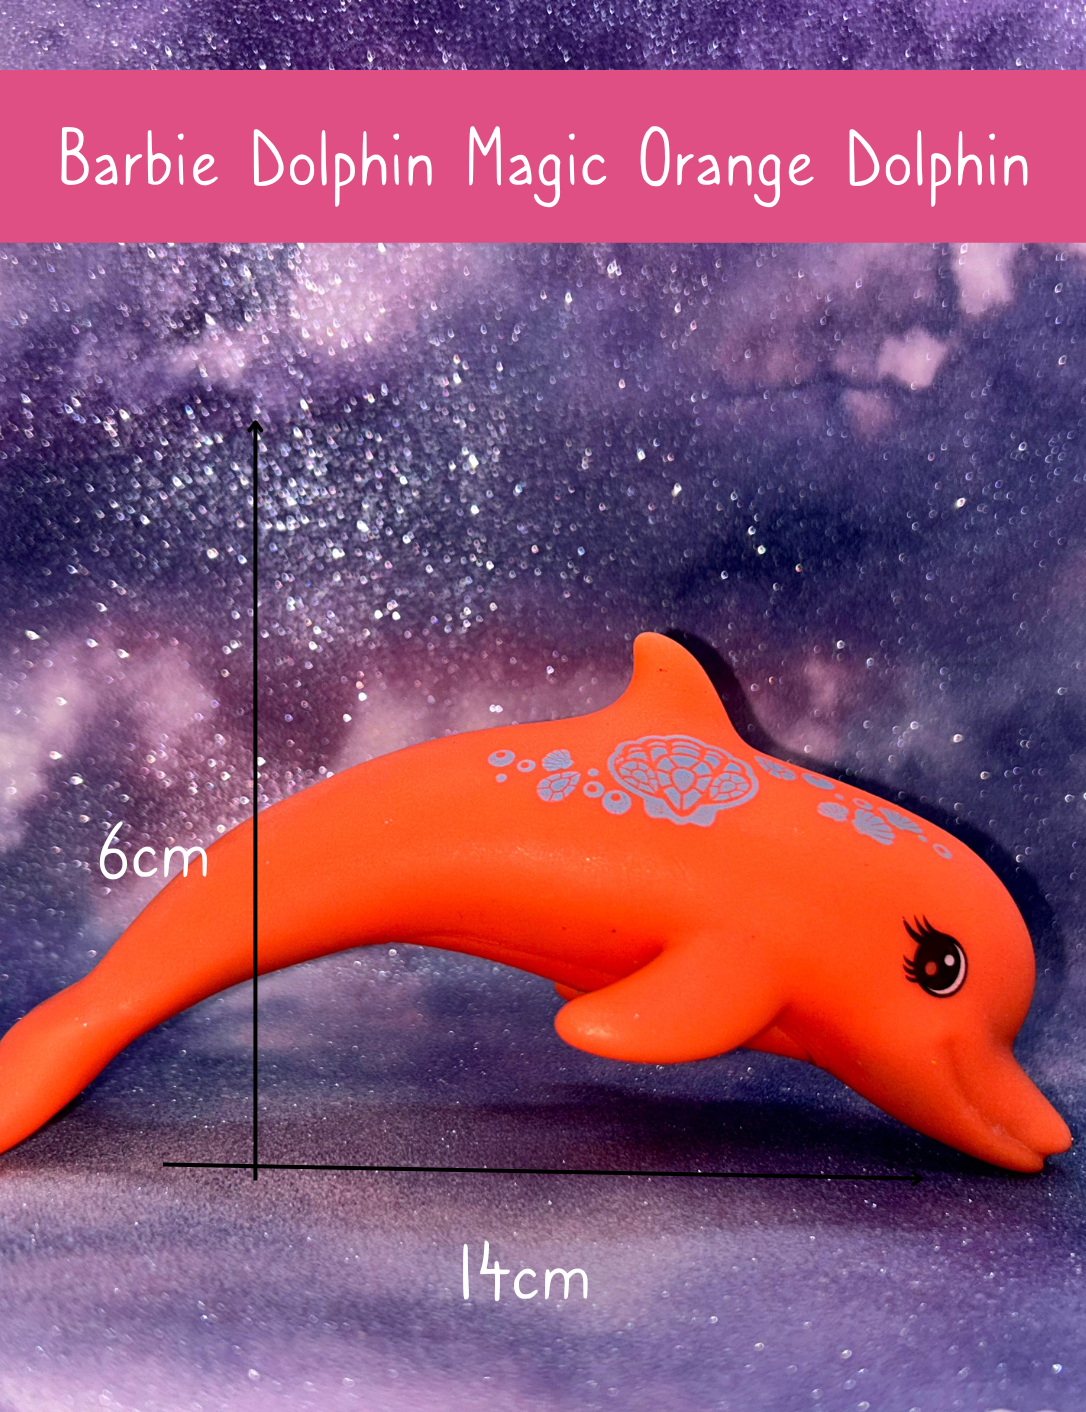 Barbie Dolphin Magic Fashion Doll Orange Dolphin